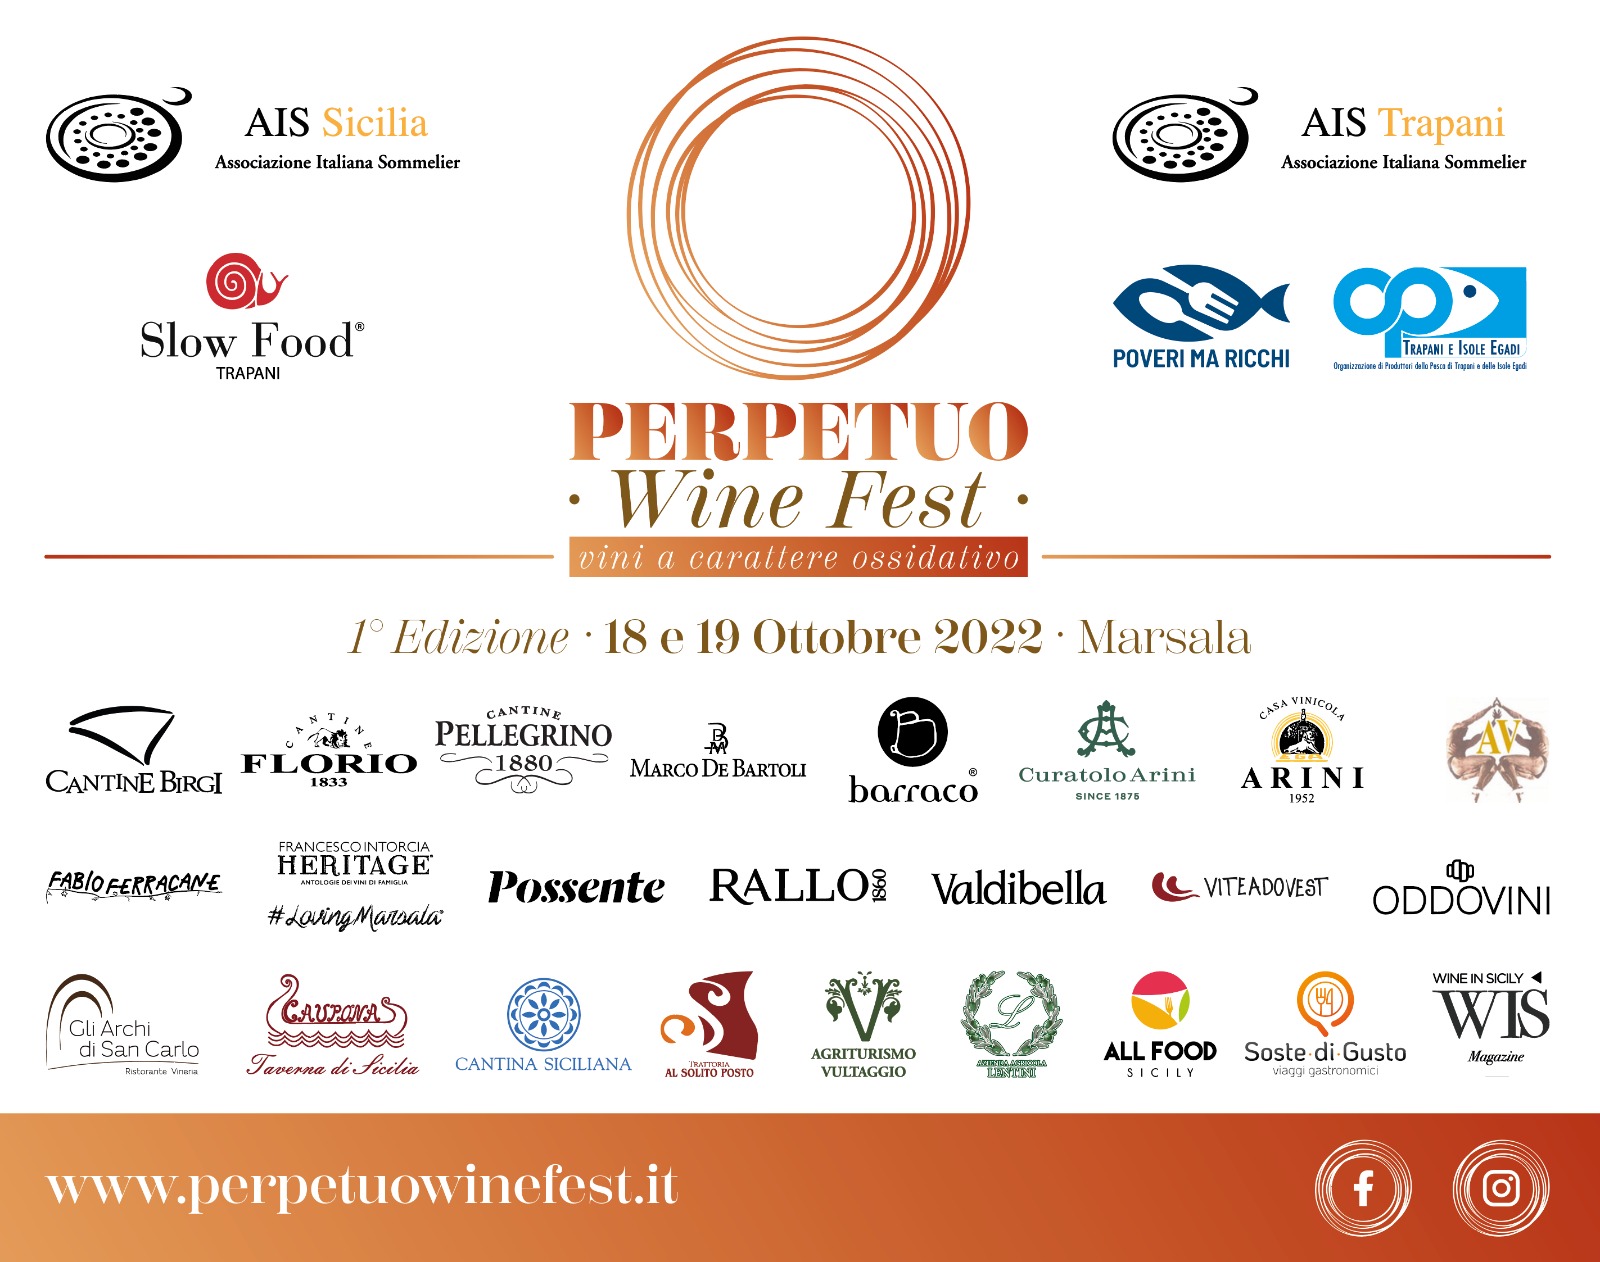 Perpetuo Wine Fest - Partners